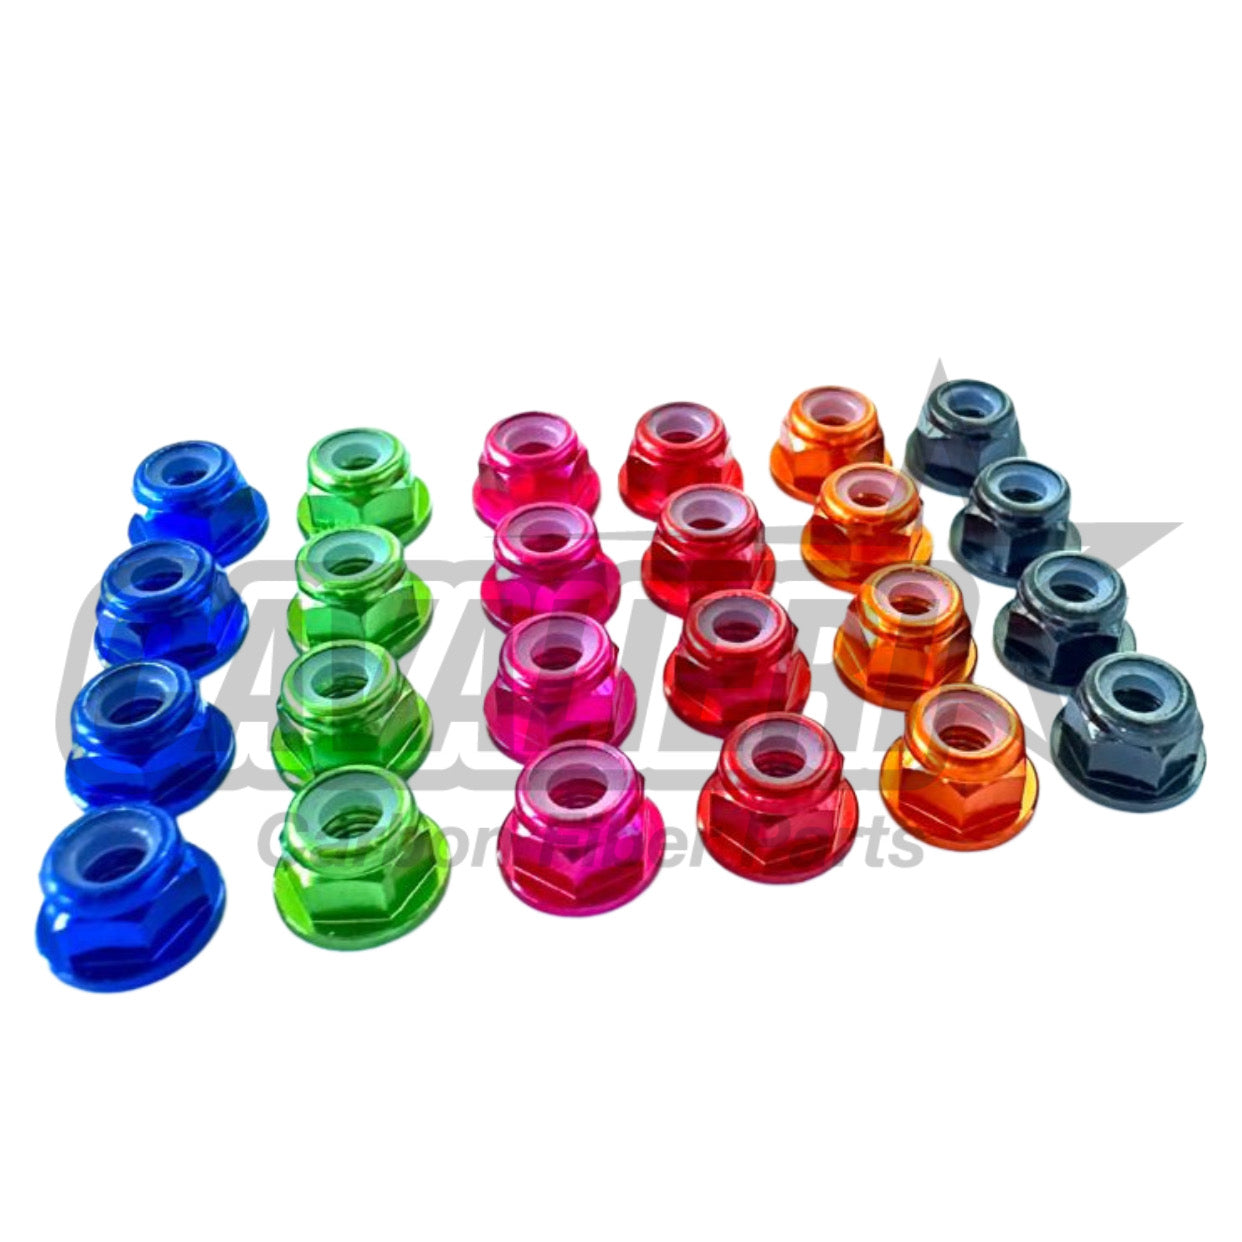 M3 Self-locking Nut with Flange Kit 4 Pieces (Alu) -Blue&Green&Pink&Red&Orange&Black